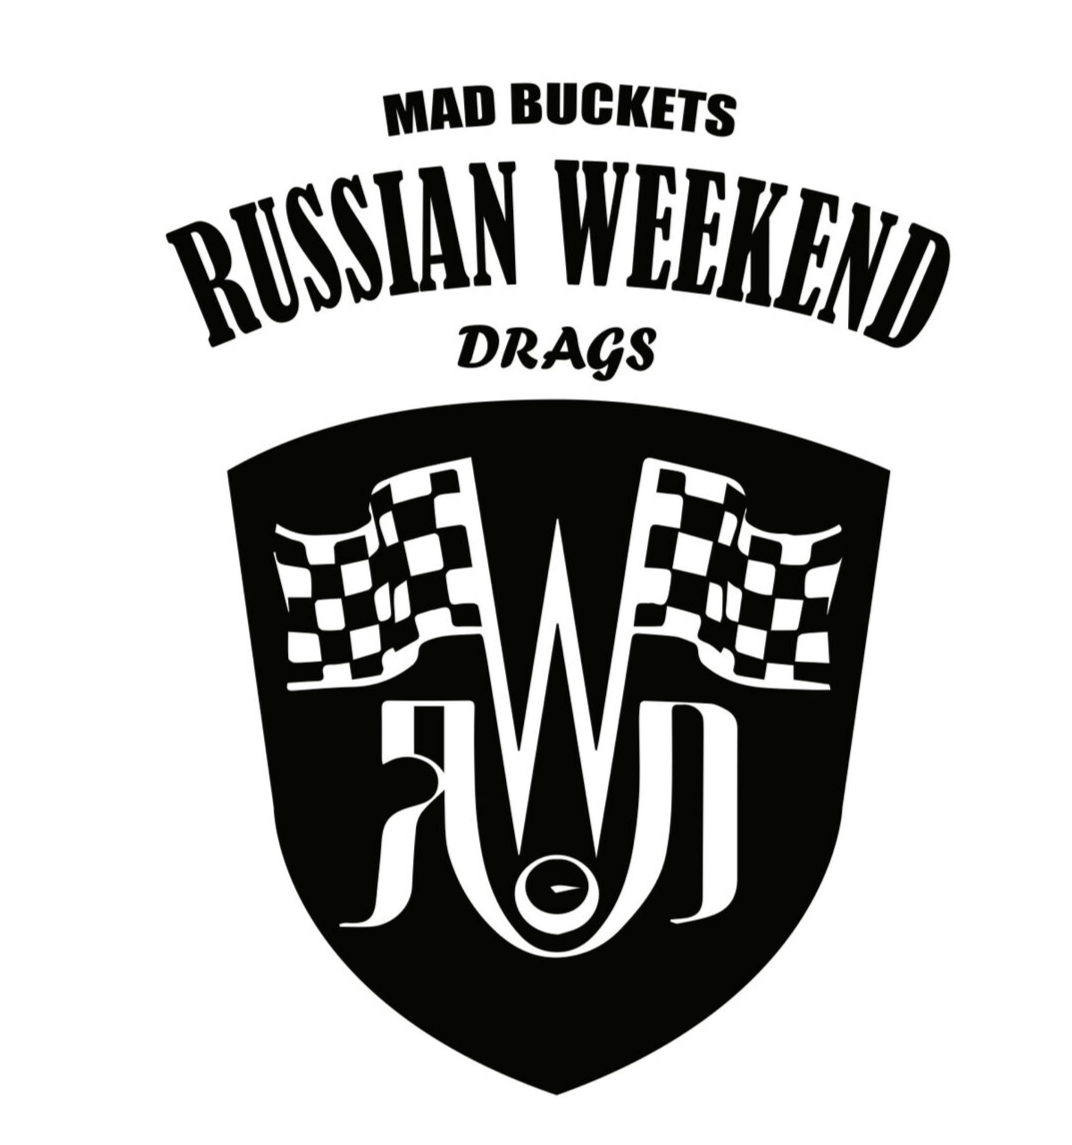 Russian Weekend Drags